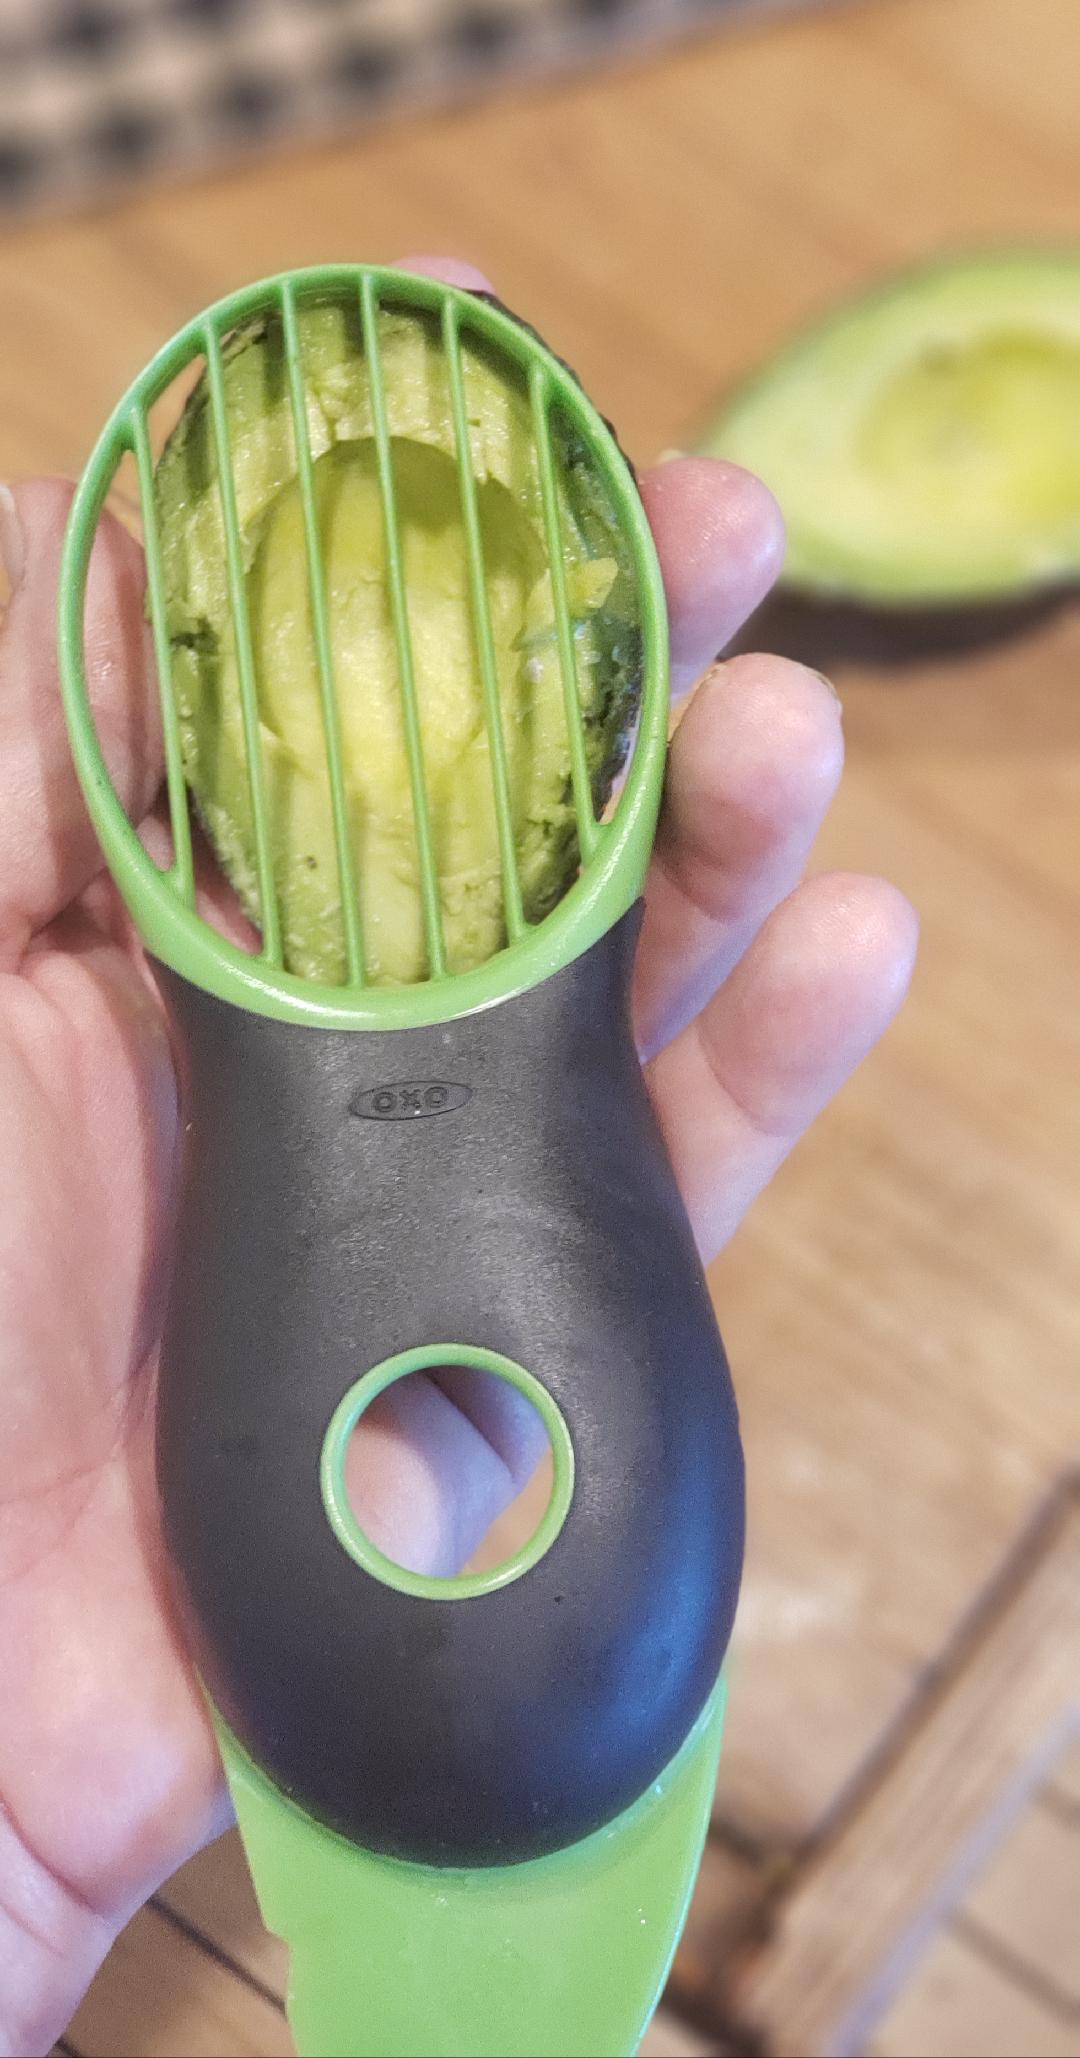 kitchen avocado slicer tool slicing an avocado